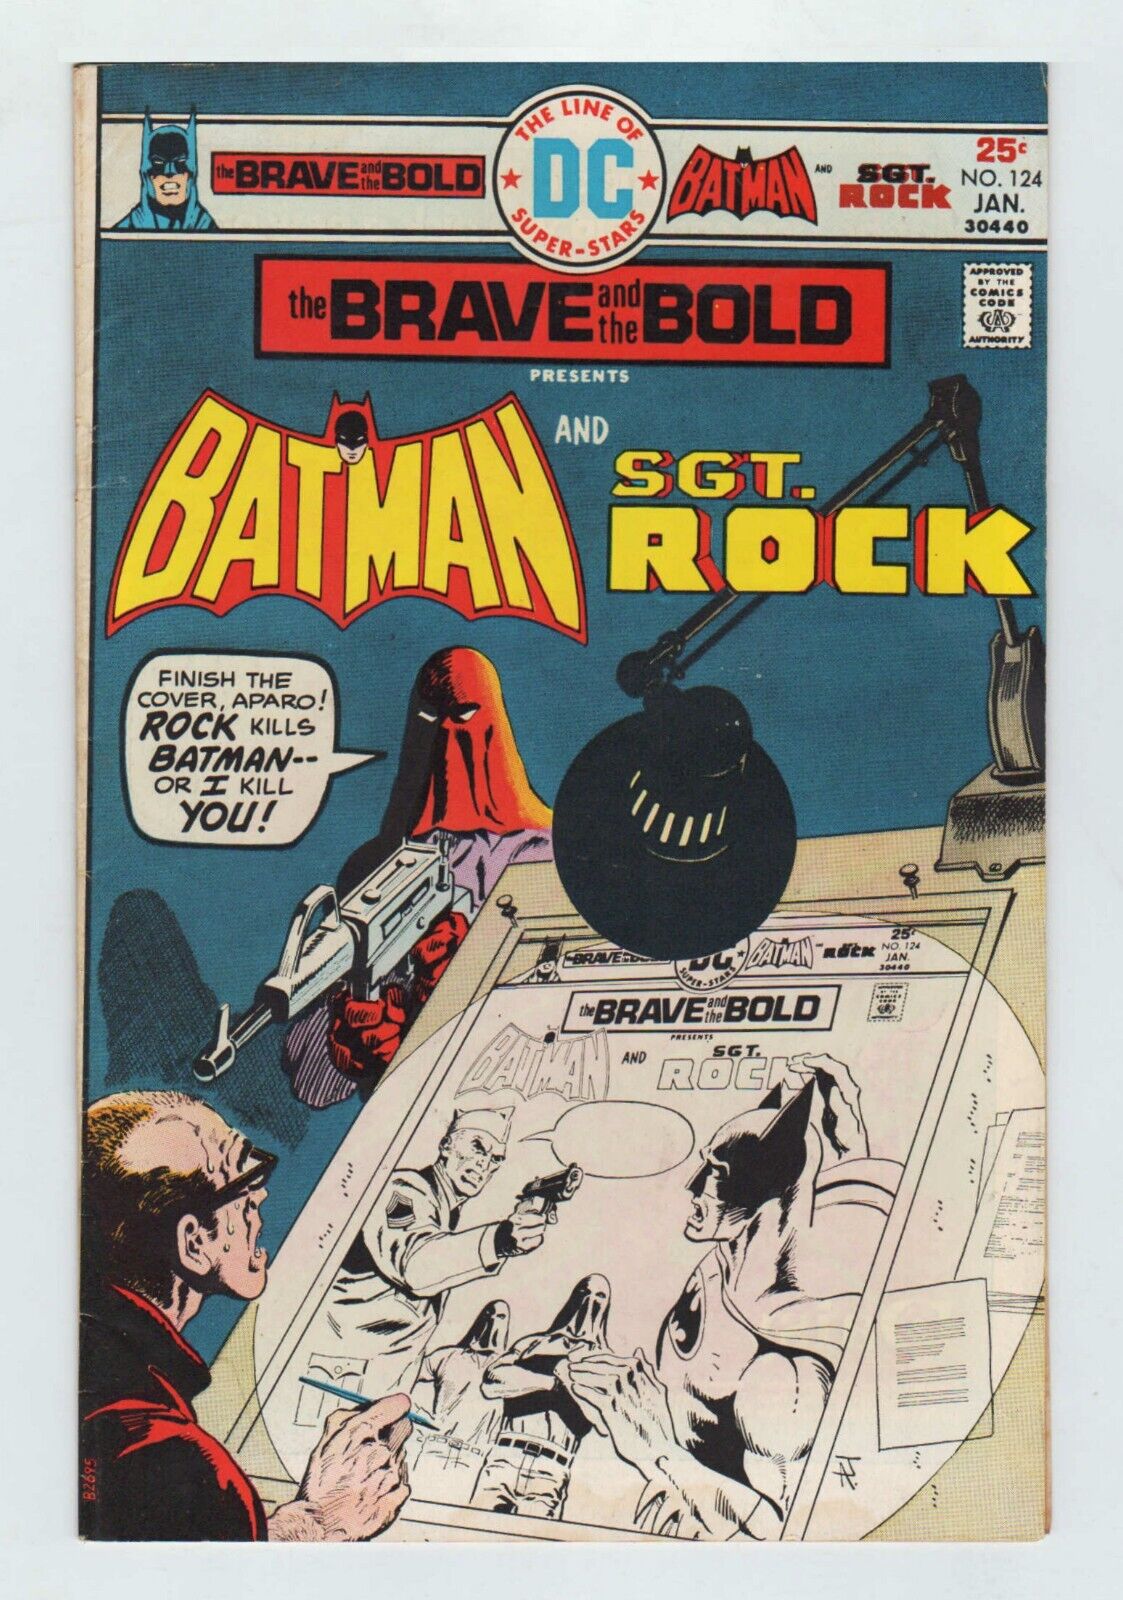 Comic: Brave And The Bold #124 - Jan 1976  Sgt Rock & Jim Aparo (Artist) appear